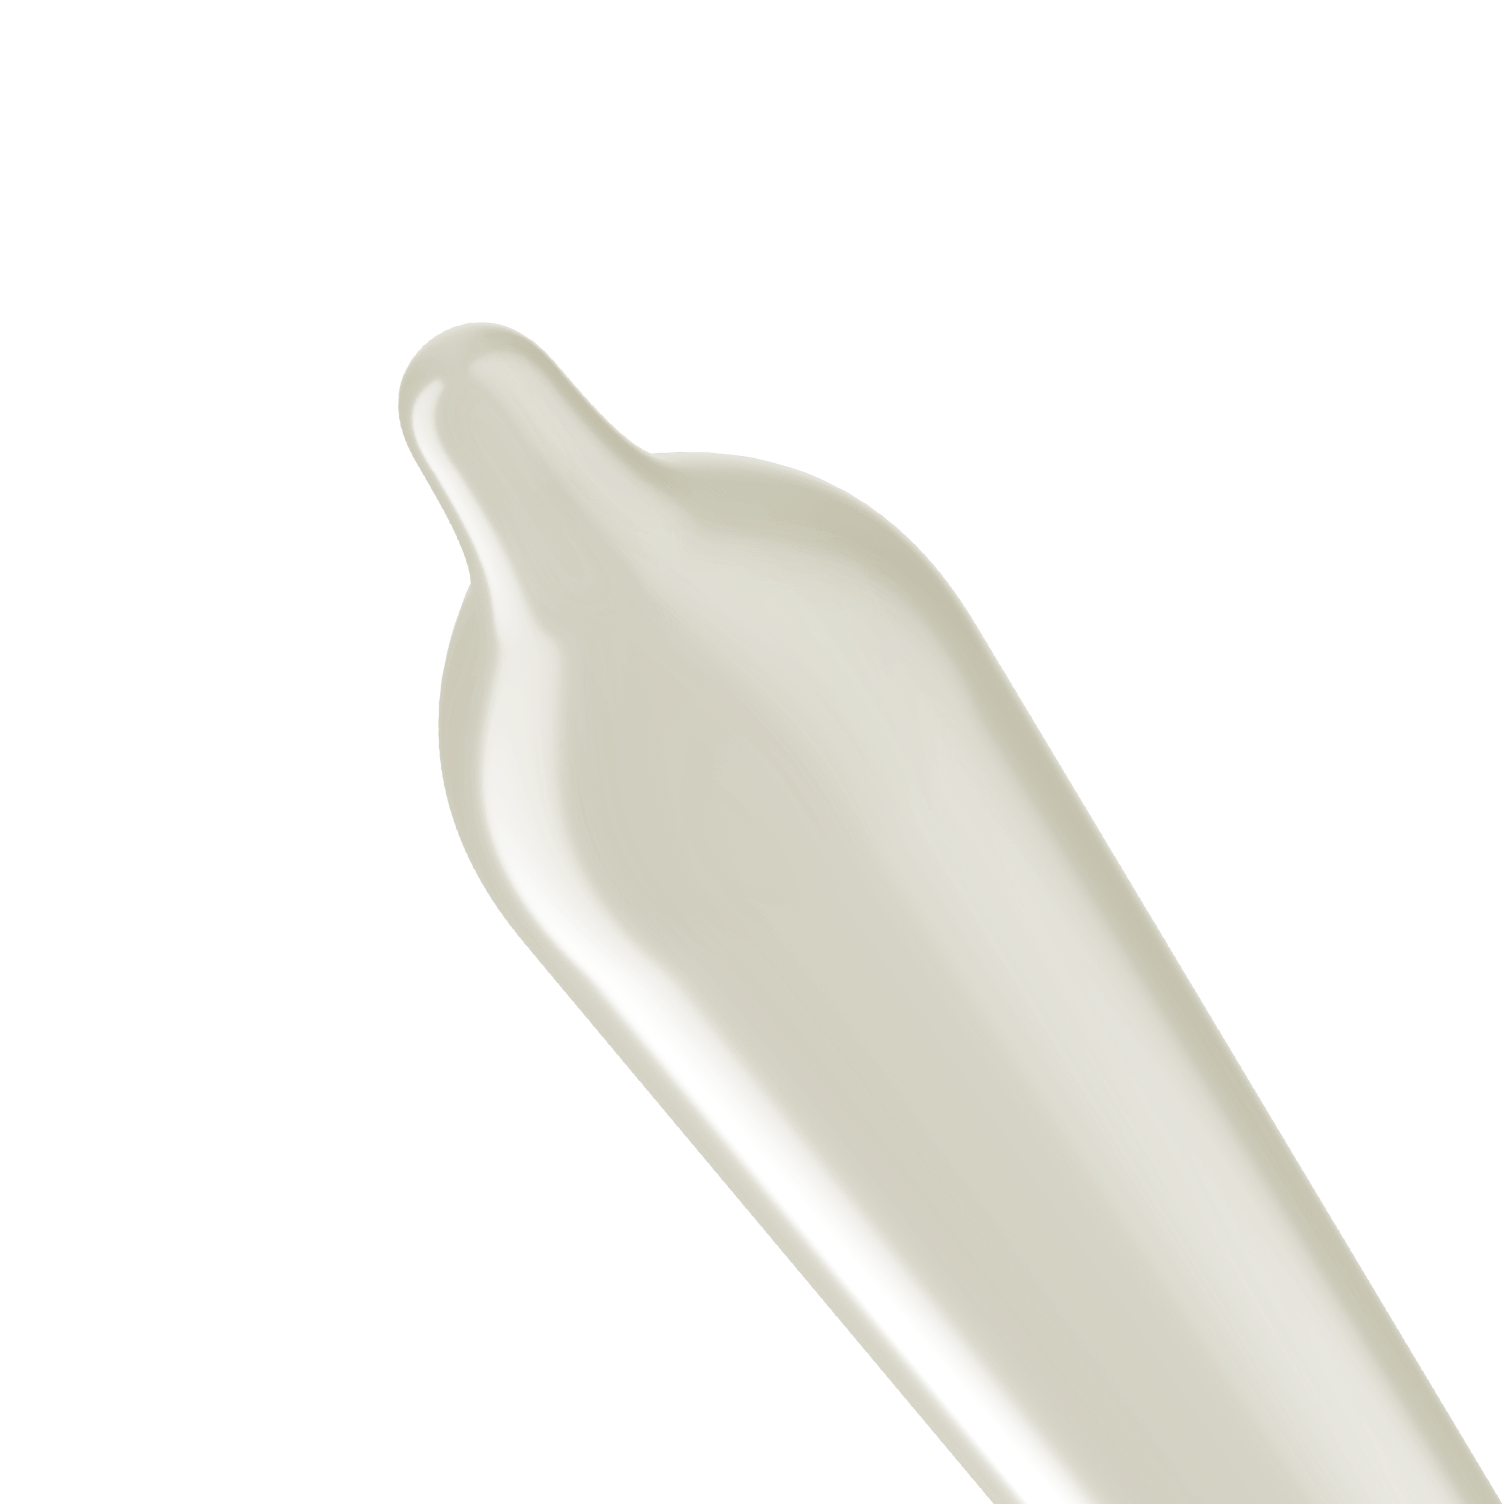 Trojan ENZ straight shape condom with reservoir tip.